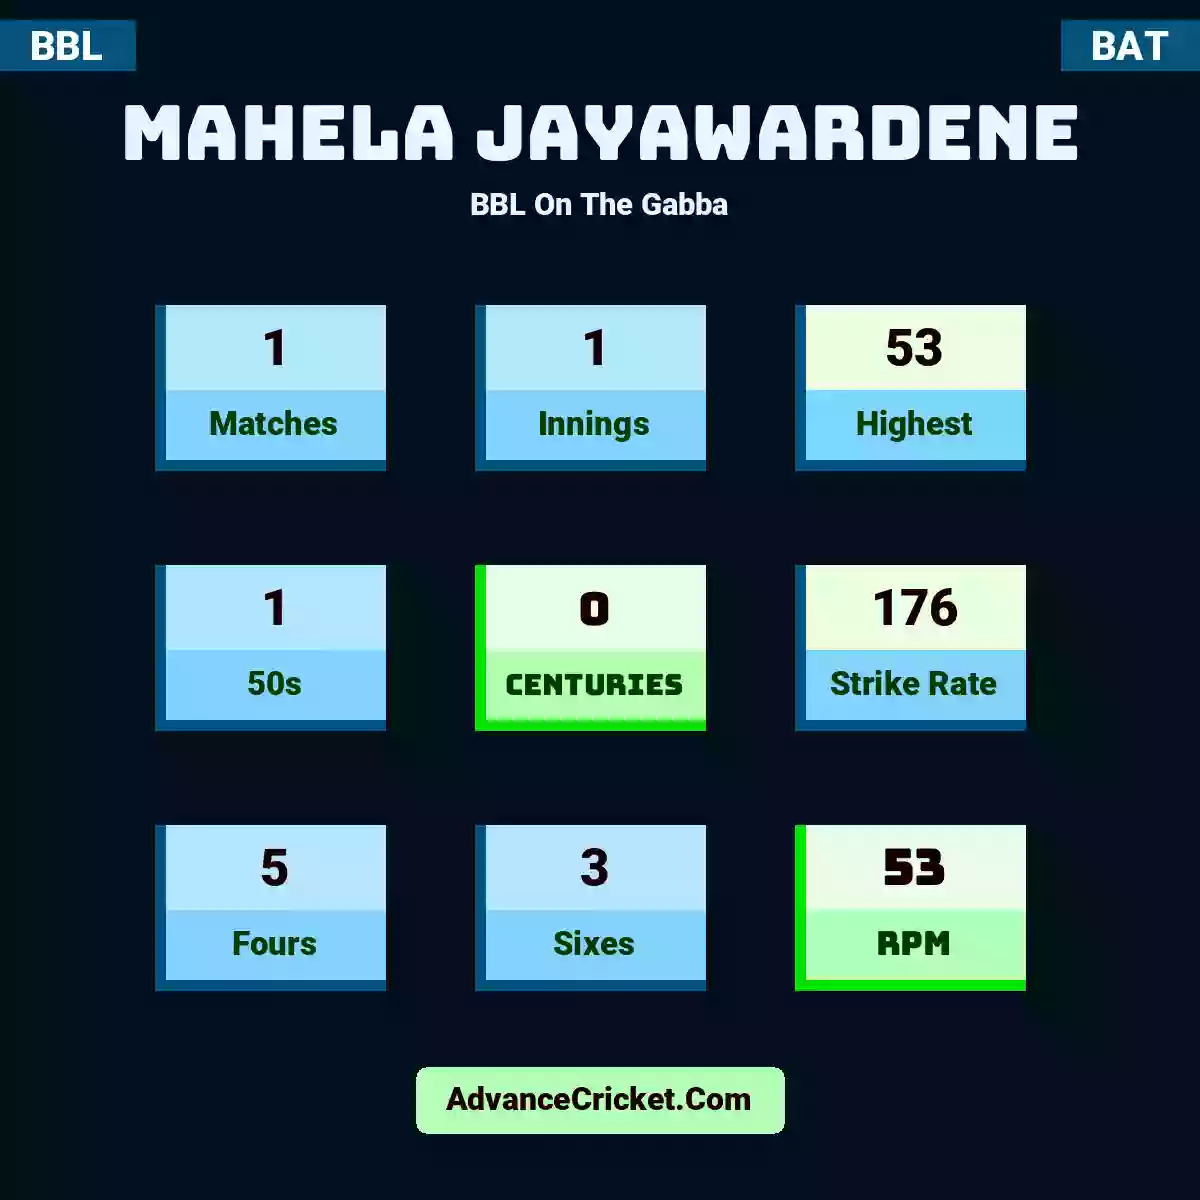 Mahela Jayawardene BBL  On The Gabba, Mahela Jayawardene played 1 matches, scored 53 runs as highest, 1 half-centuries, and 0 centuries, with a strike rate of 176. M.Jayawardene hit 5 fours and 3 sixes, with an RPM of 53.